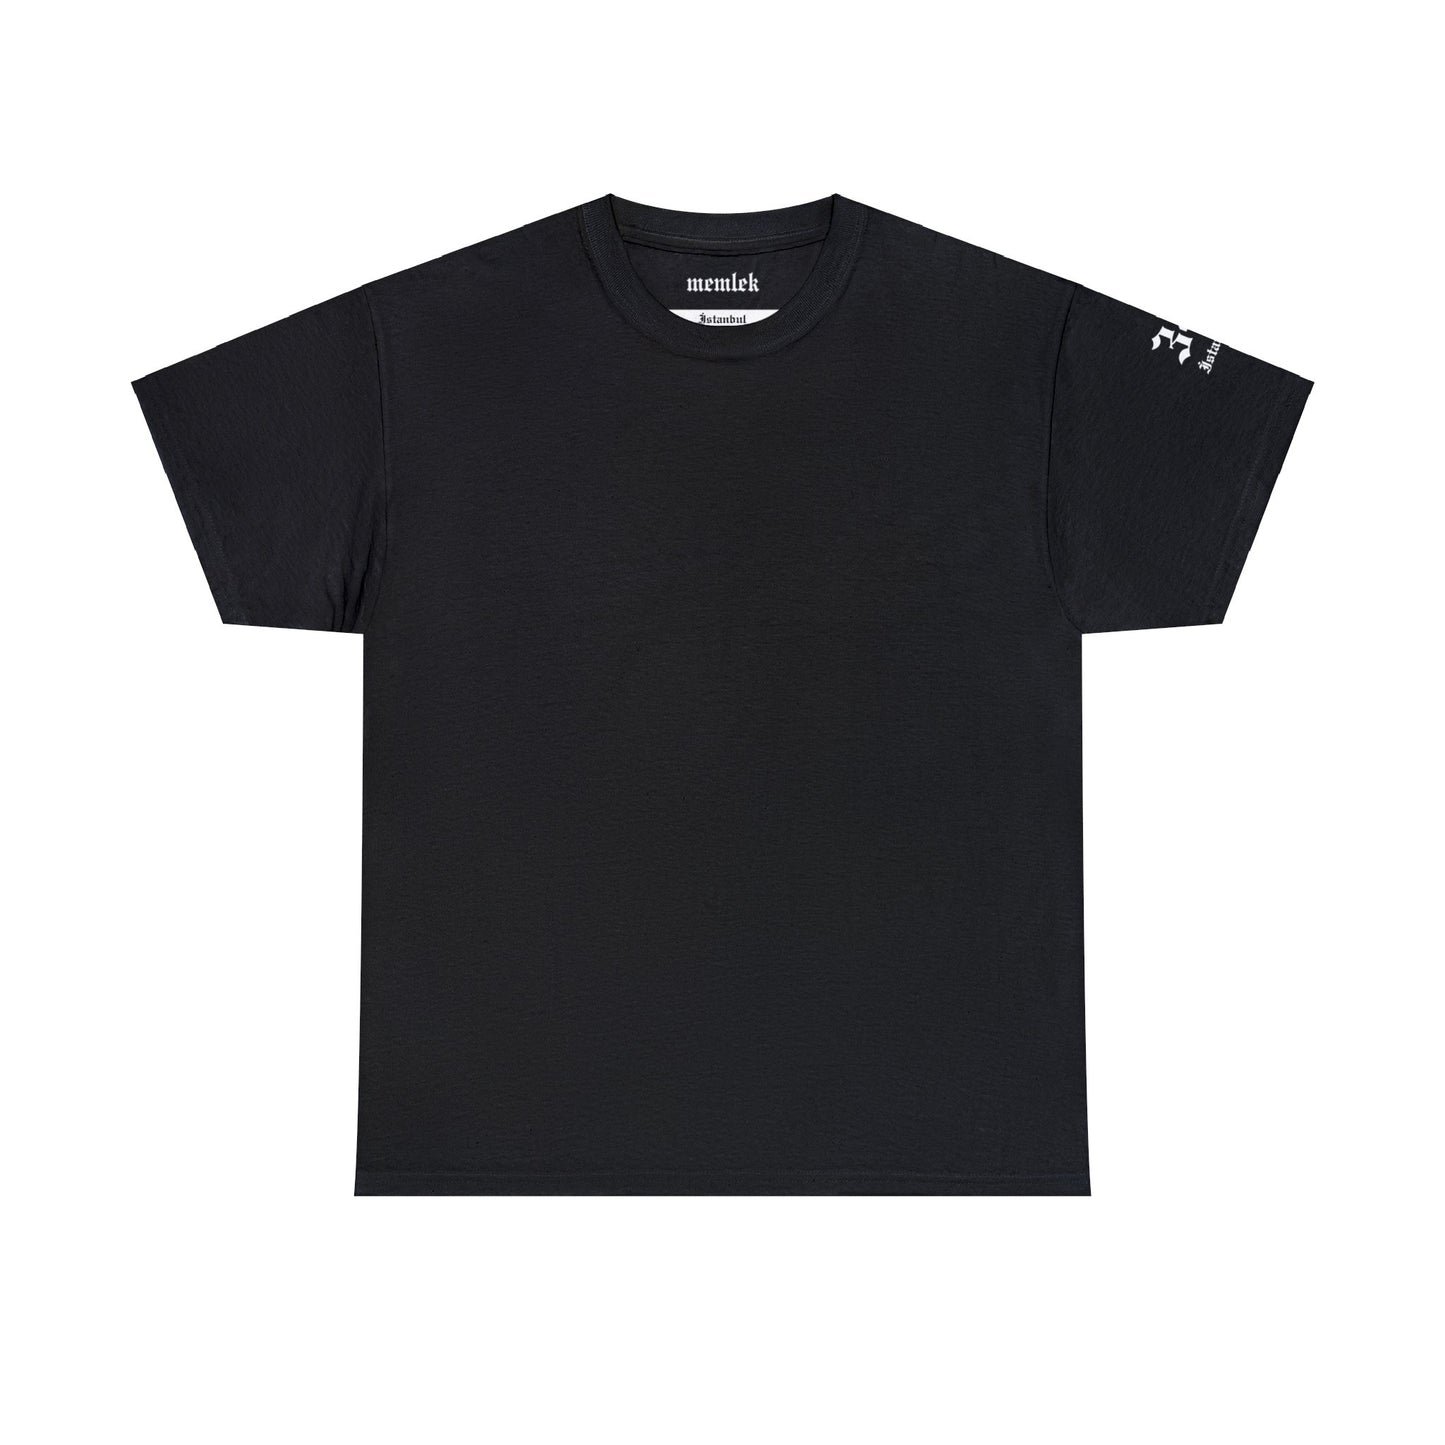 İlçem - 34 İstanbul - T-Shirt - Back Print - Black